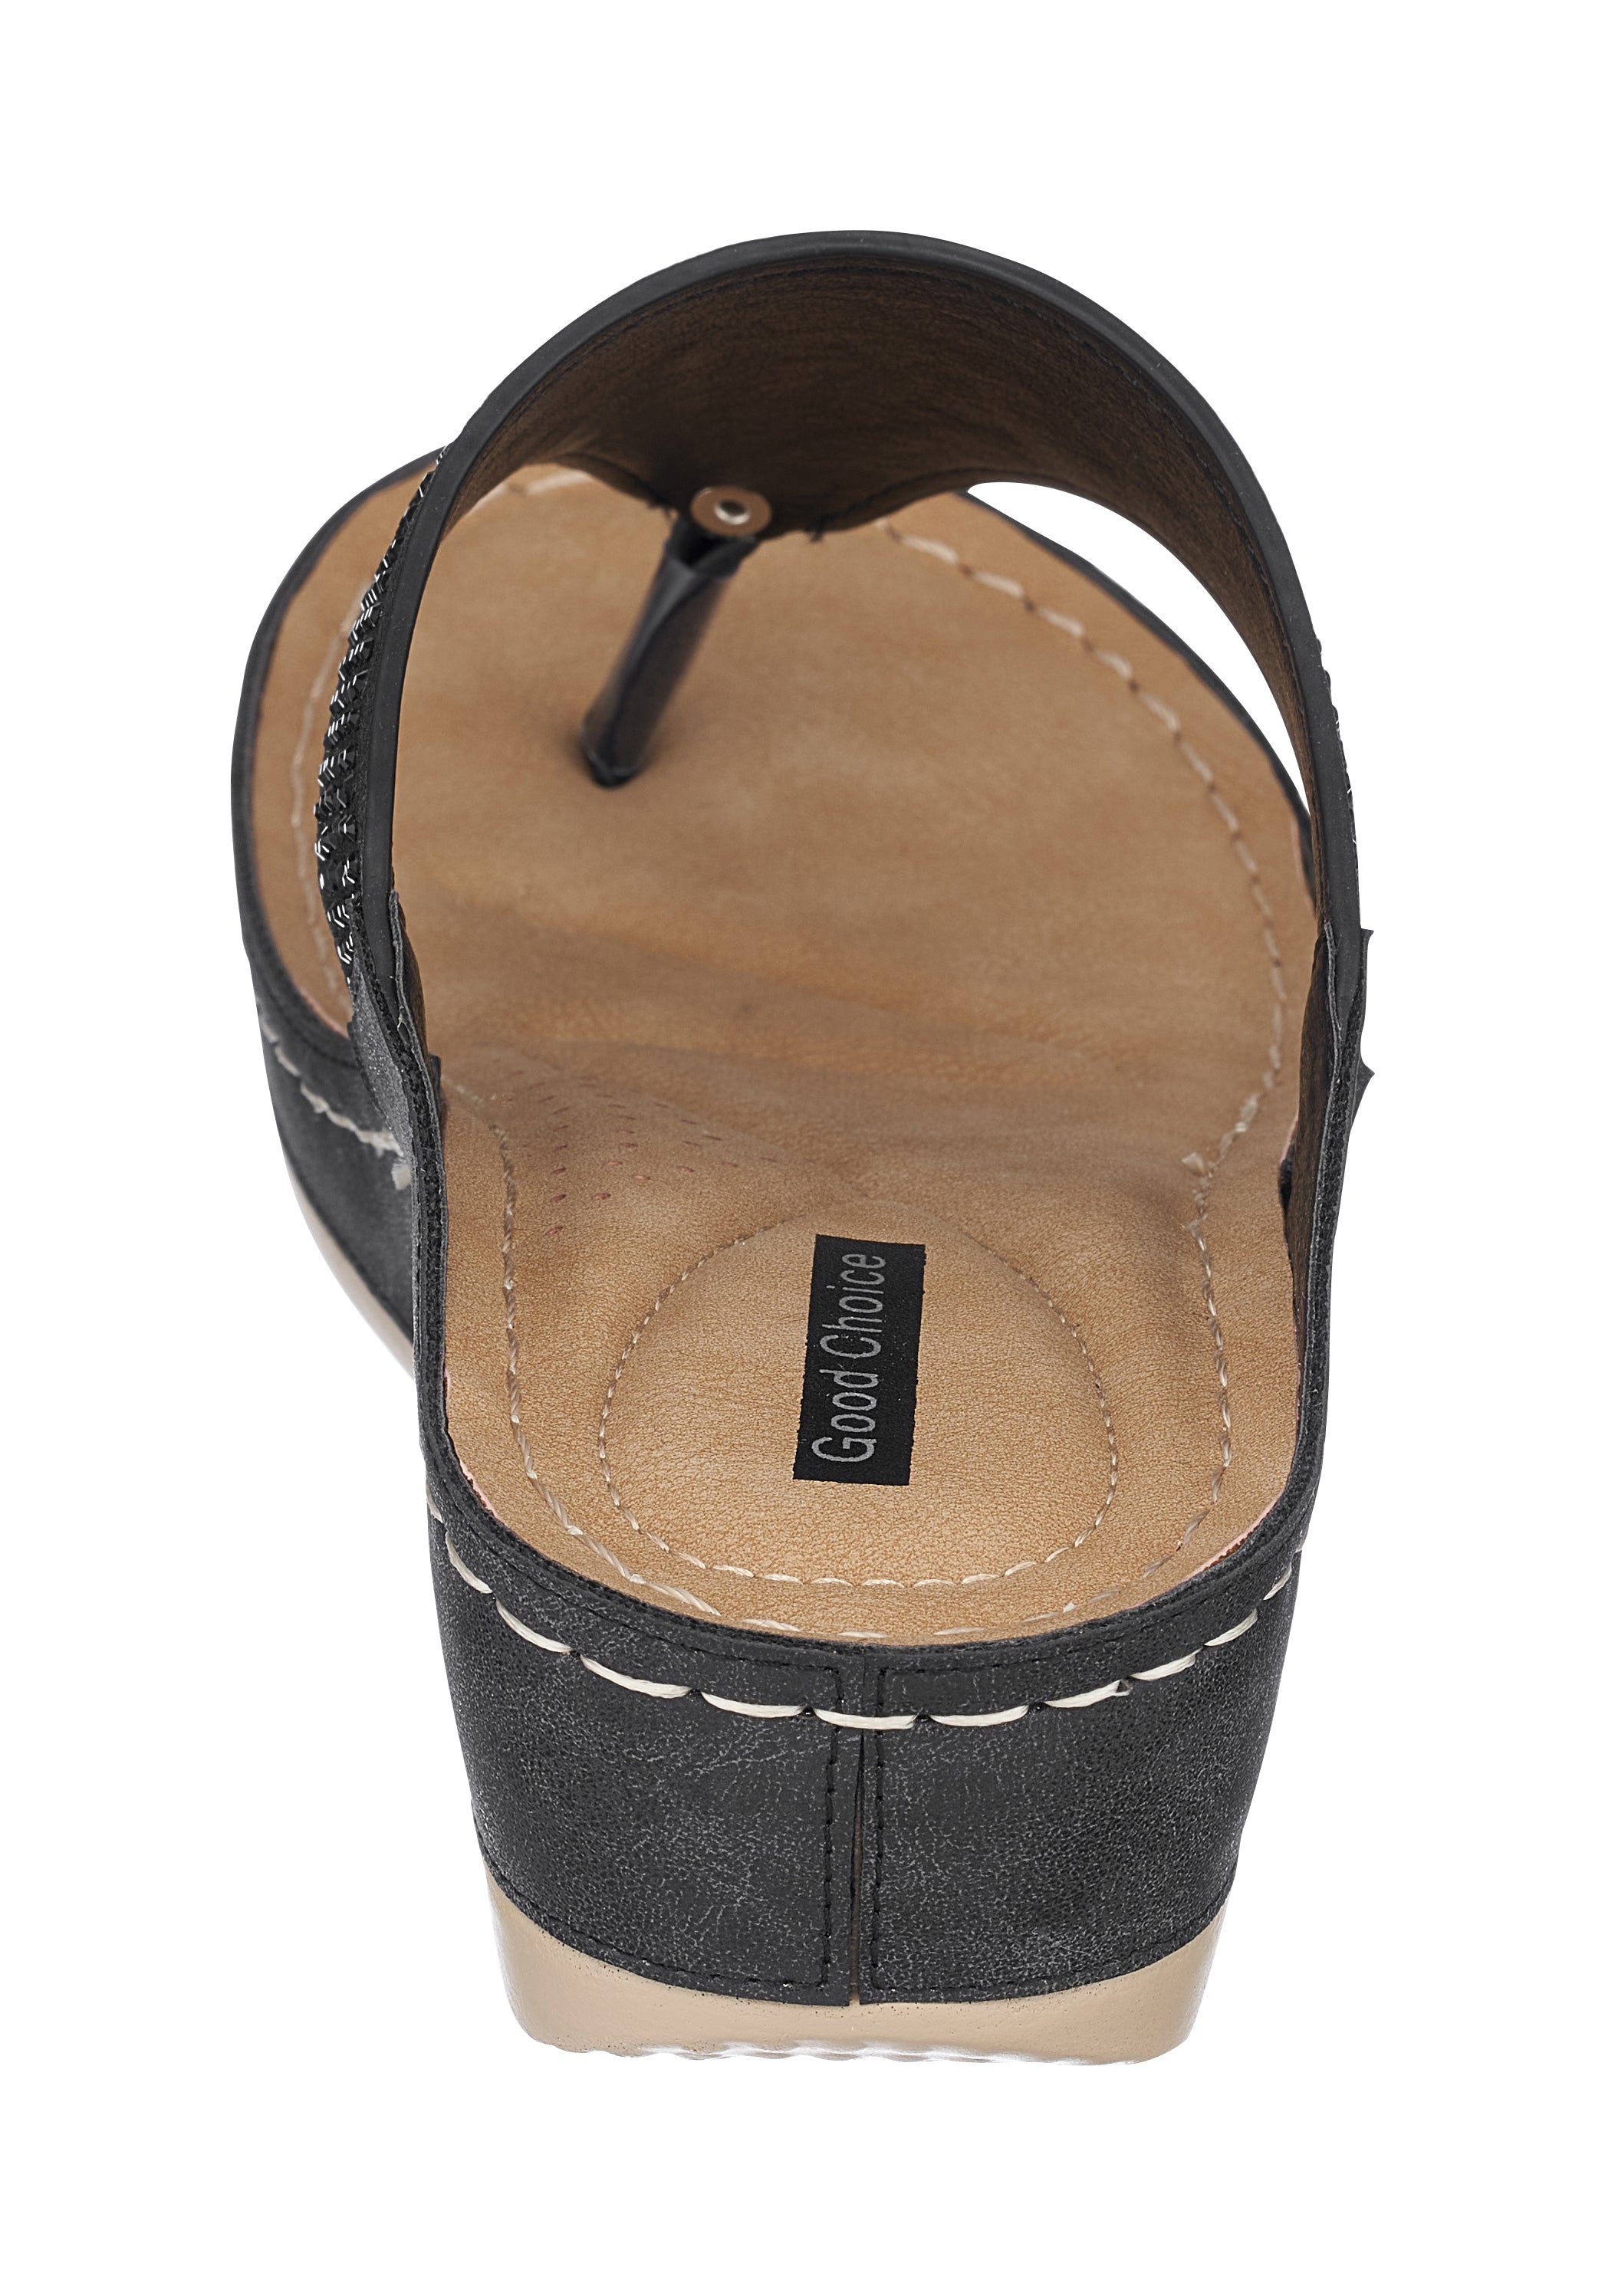 GC Shoes Tia Black 7.5 Elastic Cross Strap Espadrille Wedge Sandals